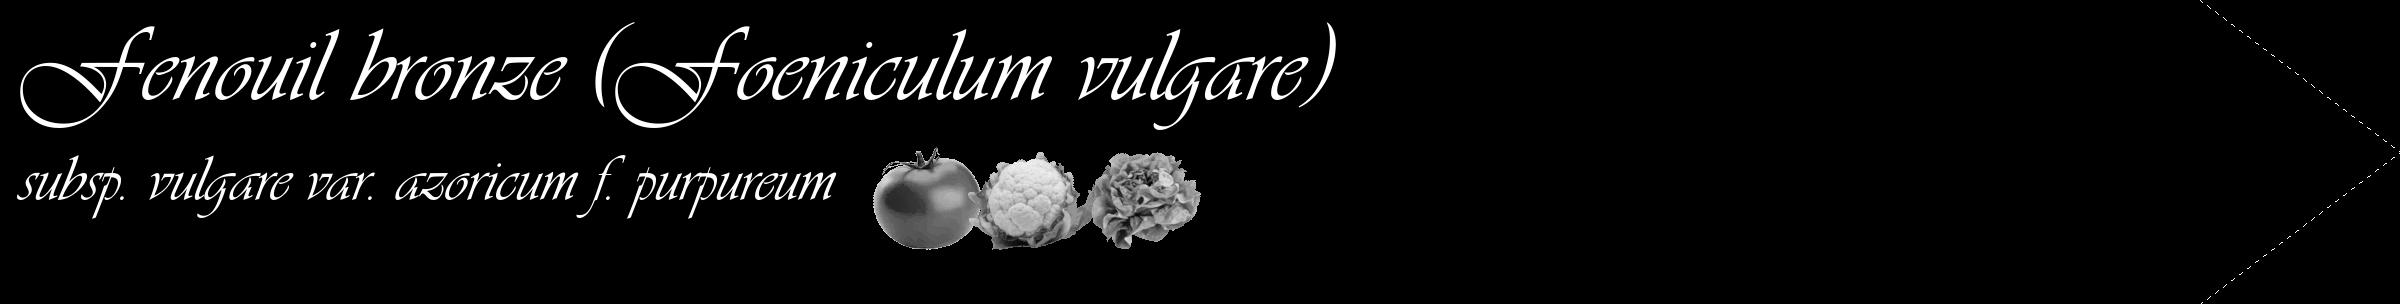 Étiquette de : Foeniculum vulgare subsp. vulgare var. azoricum f. purpureum - format c - style blanche59_simple_simpleviv avec comestibilité simplifiée